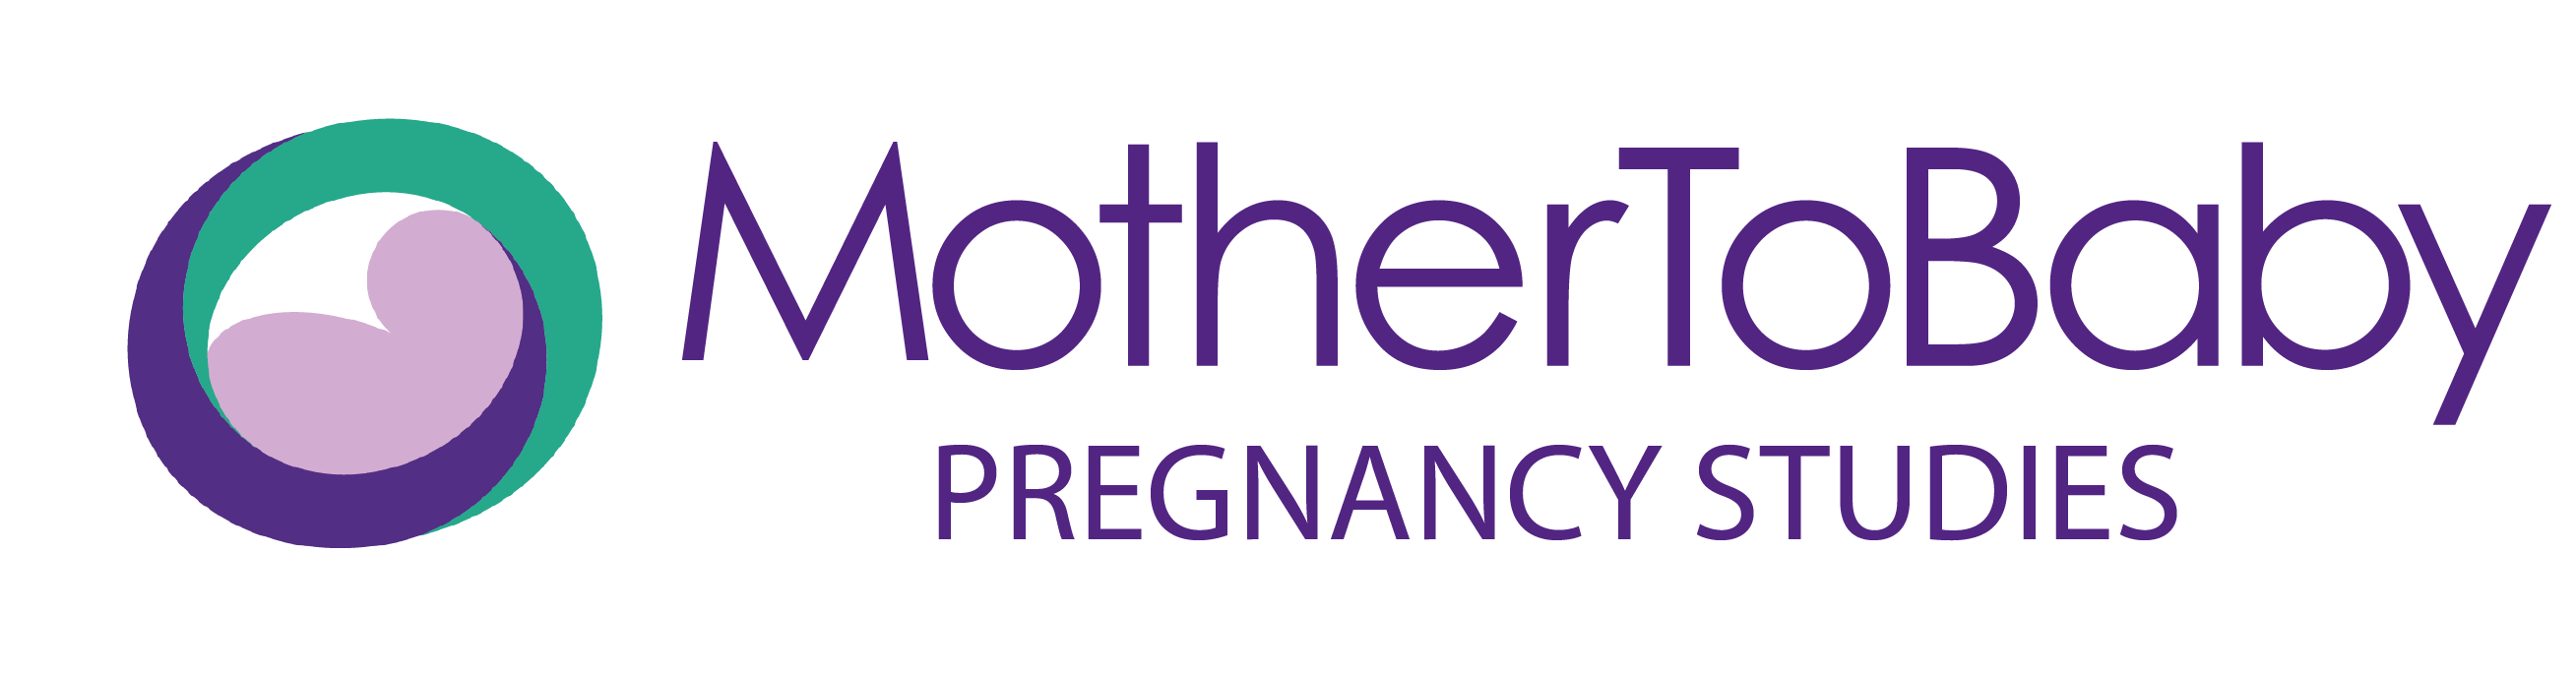 MotherToBaby Pregnancy Studies